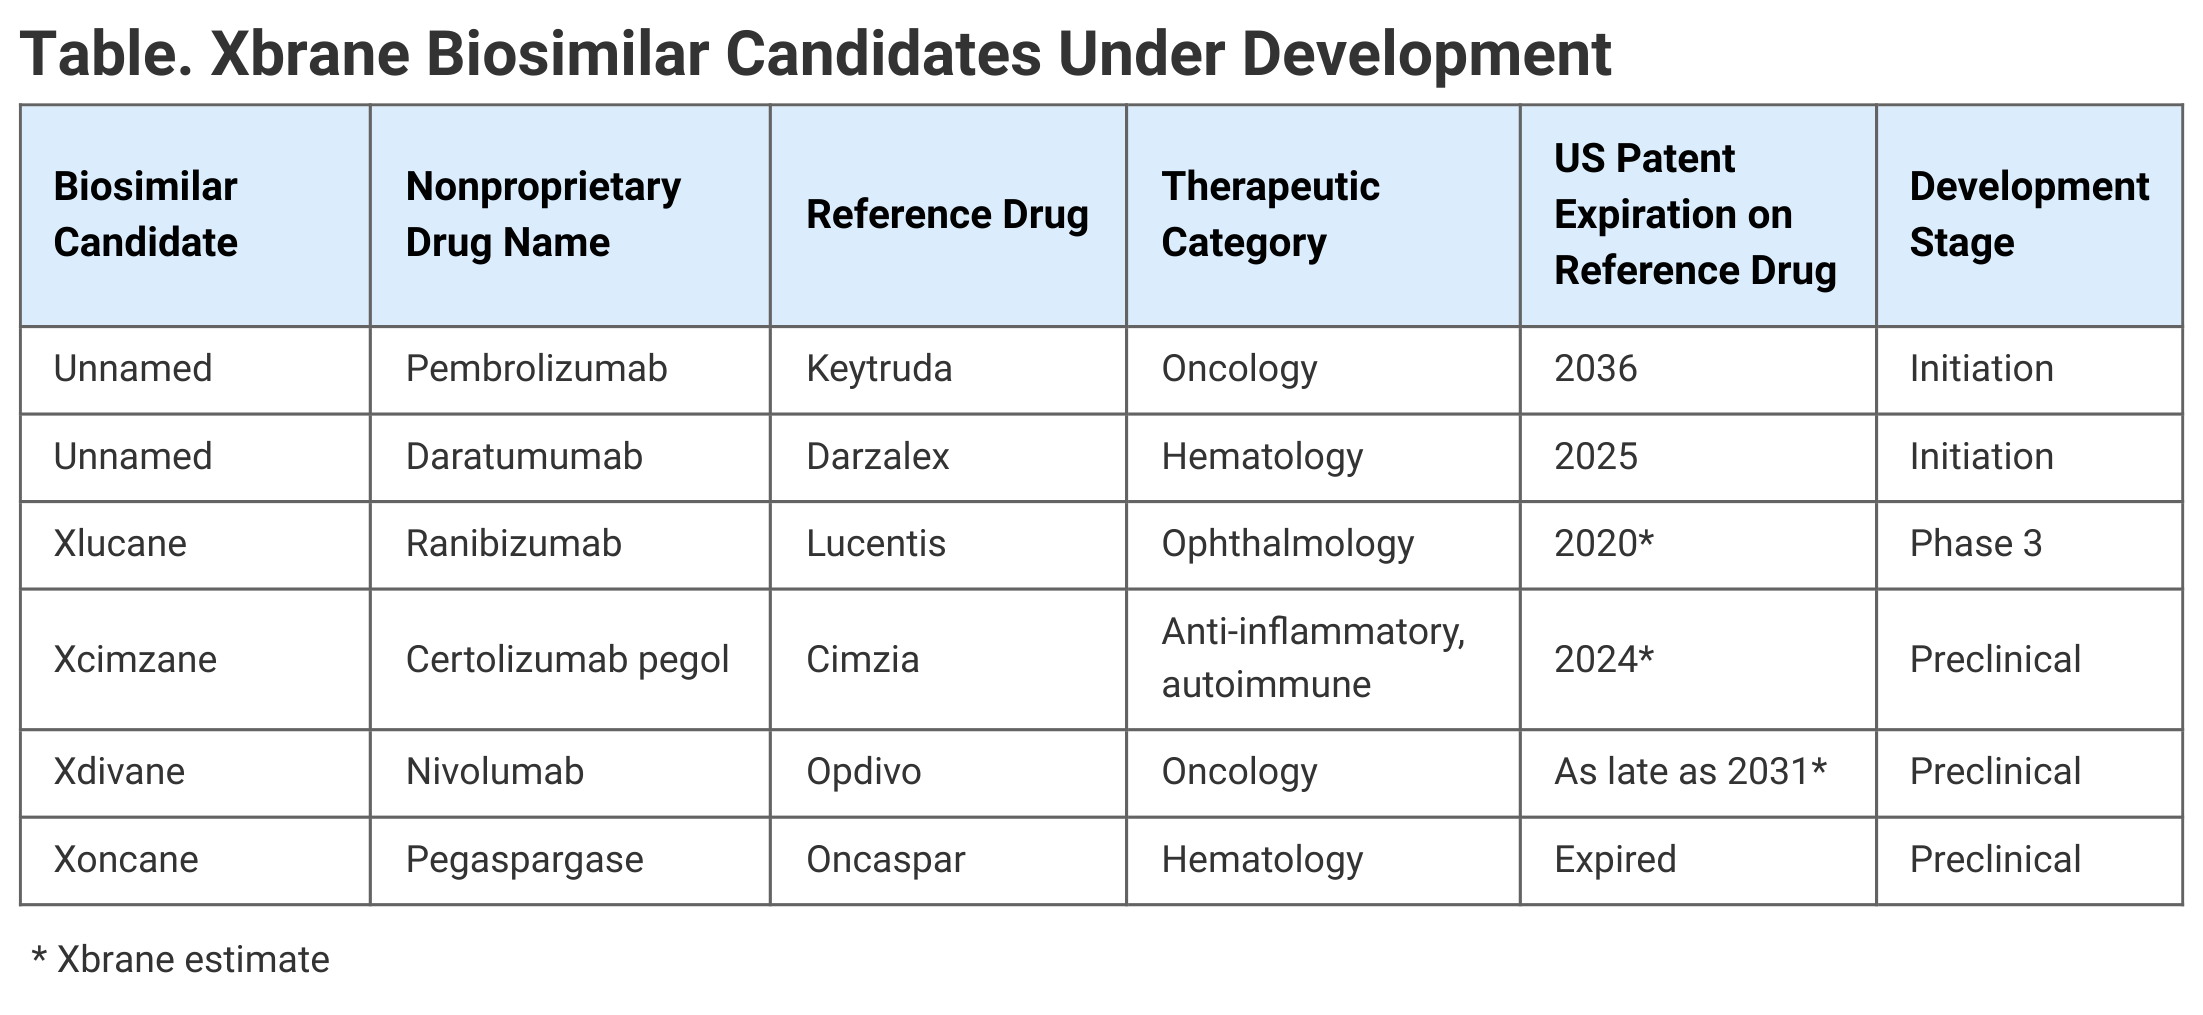 Table. Xbrane Biosimilar Candidates Under Development